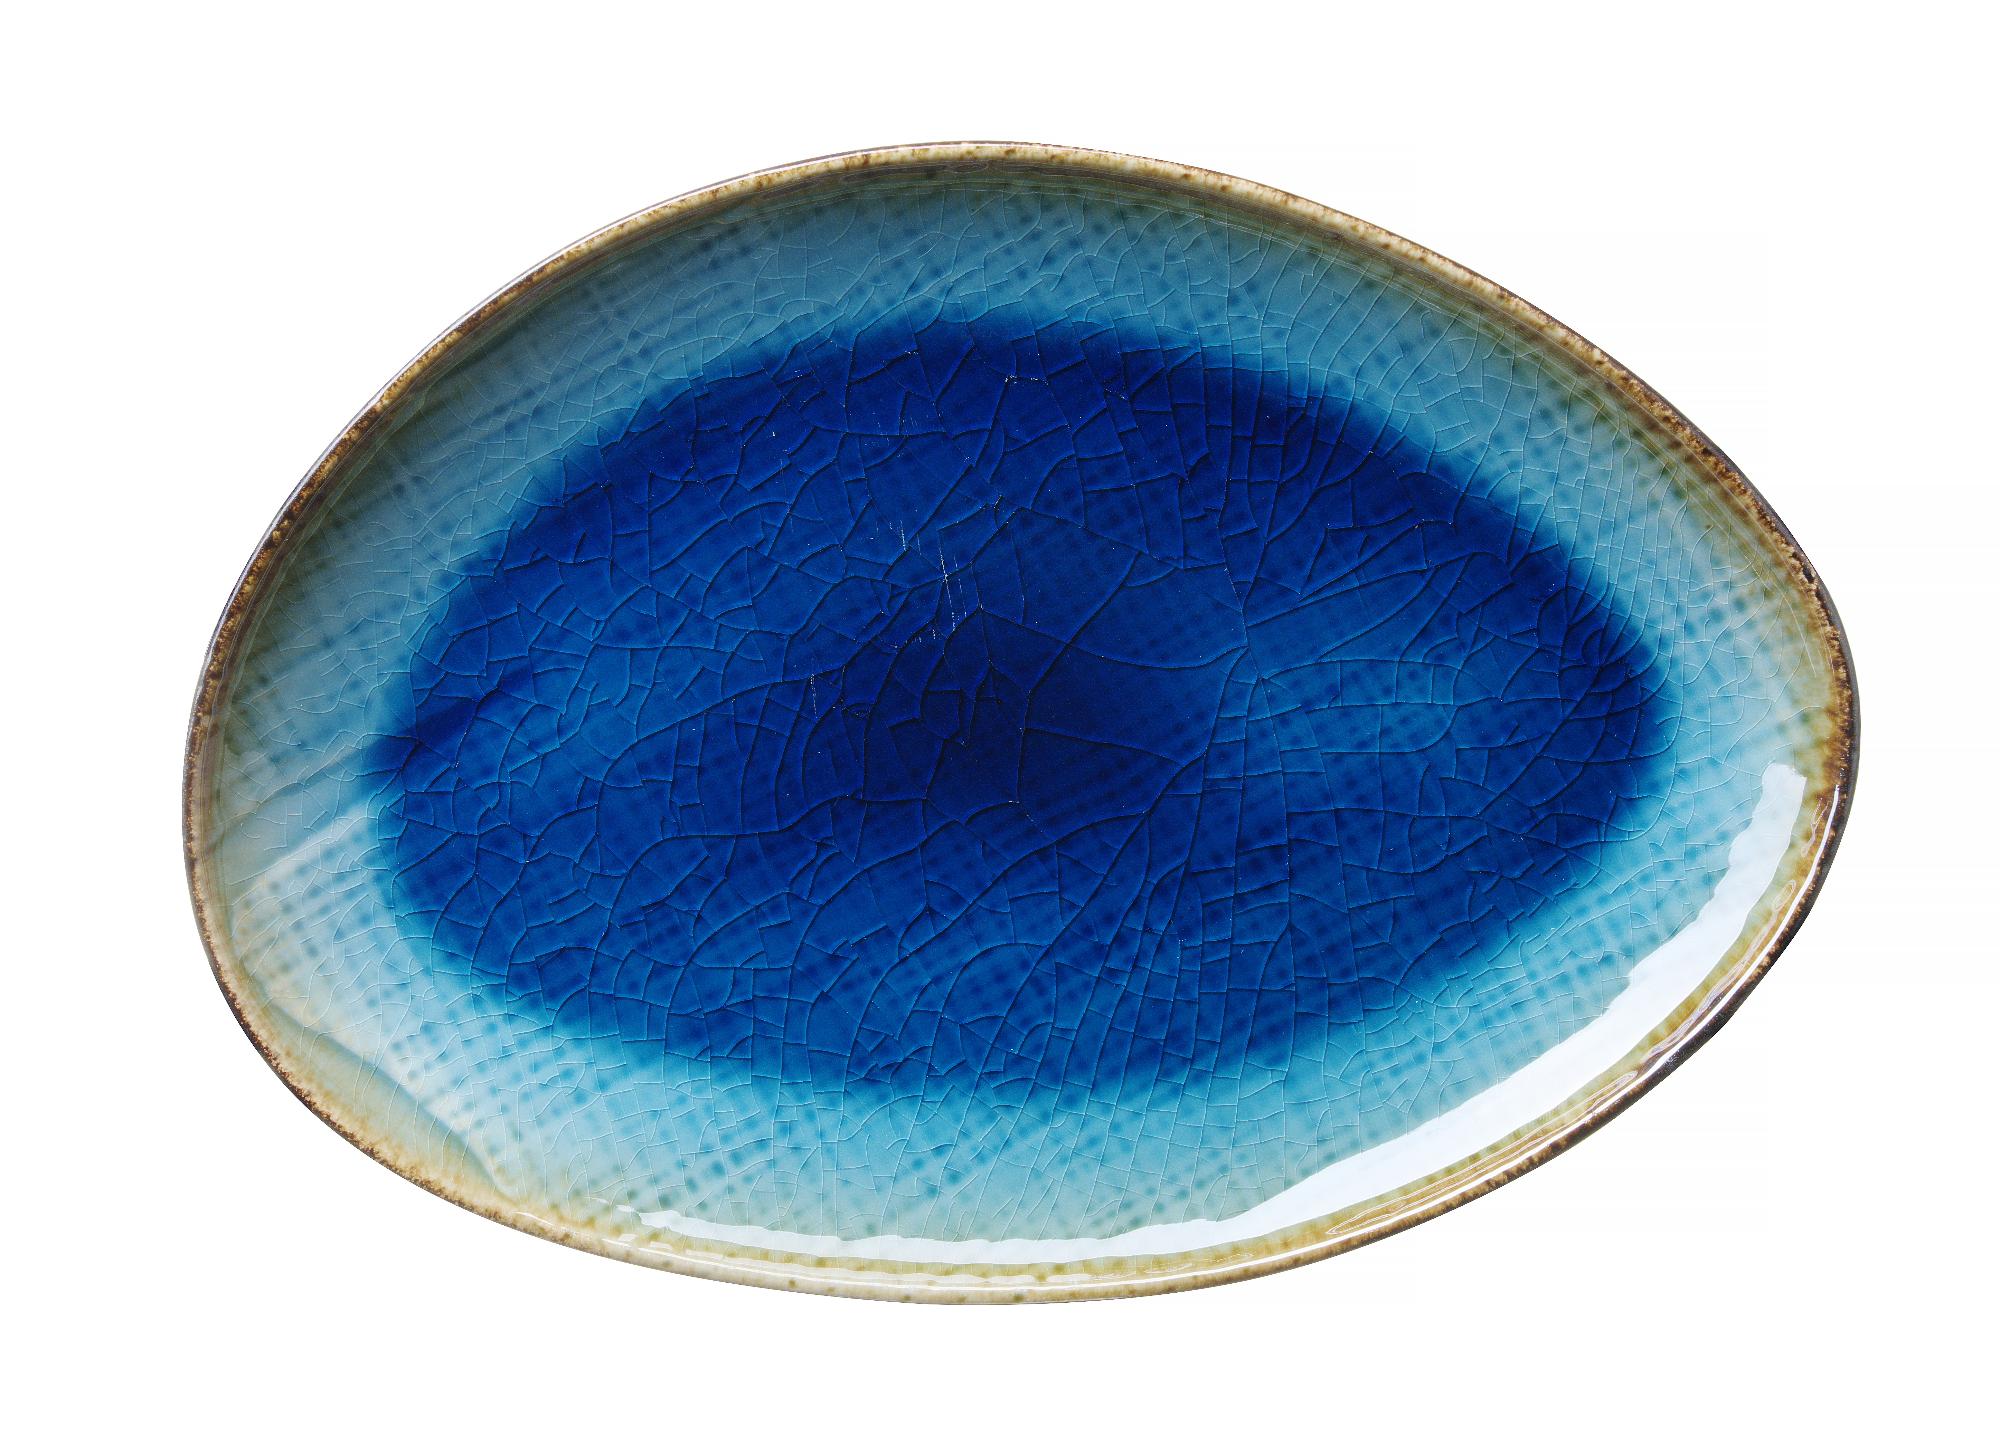 Lazur organic shaped plate, 270x190mm